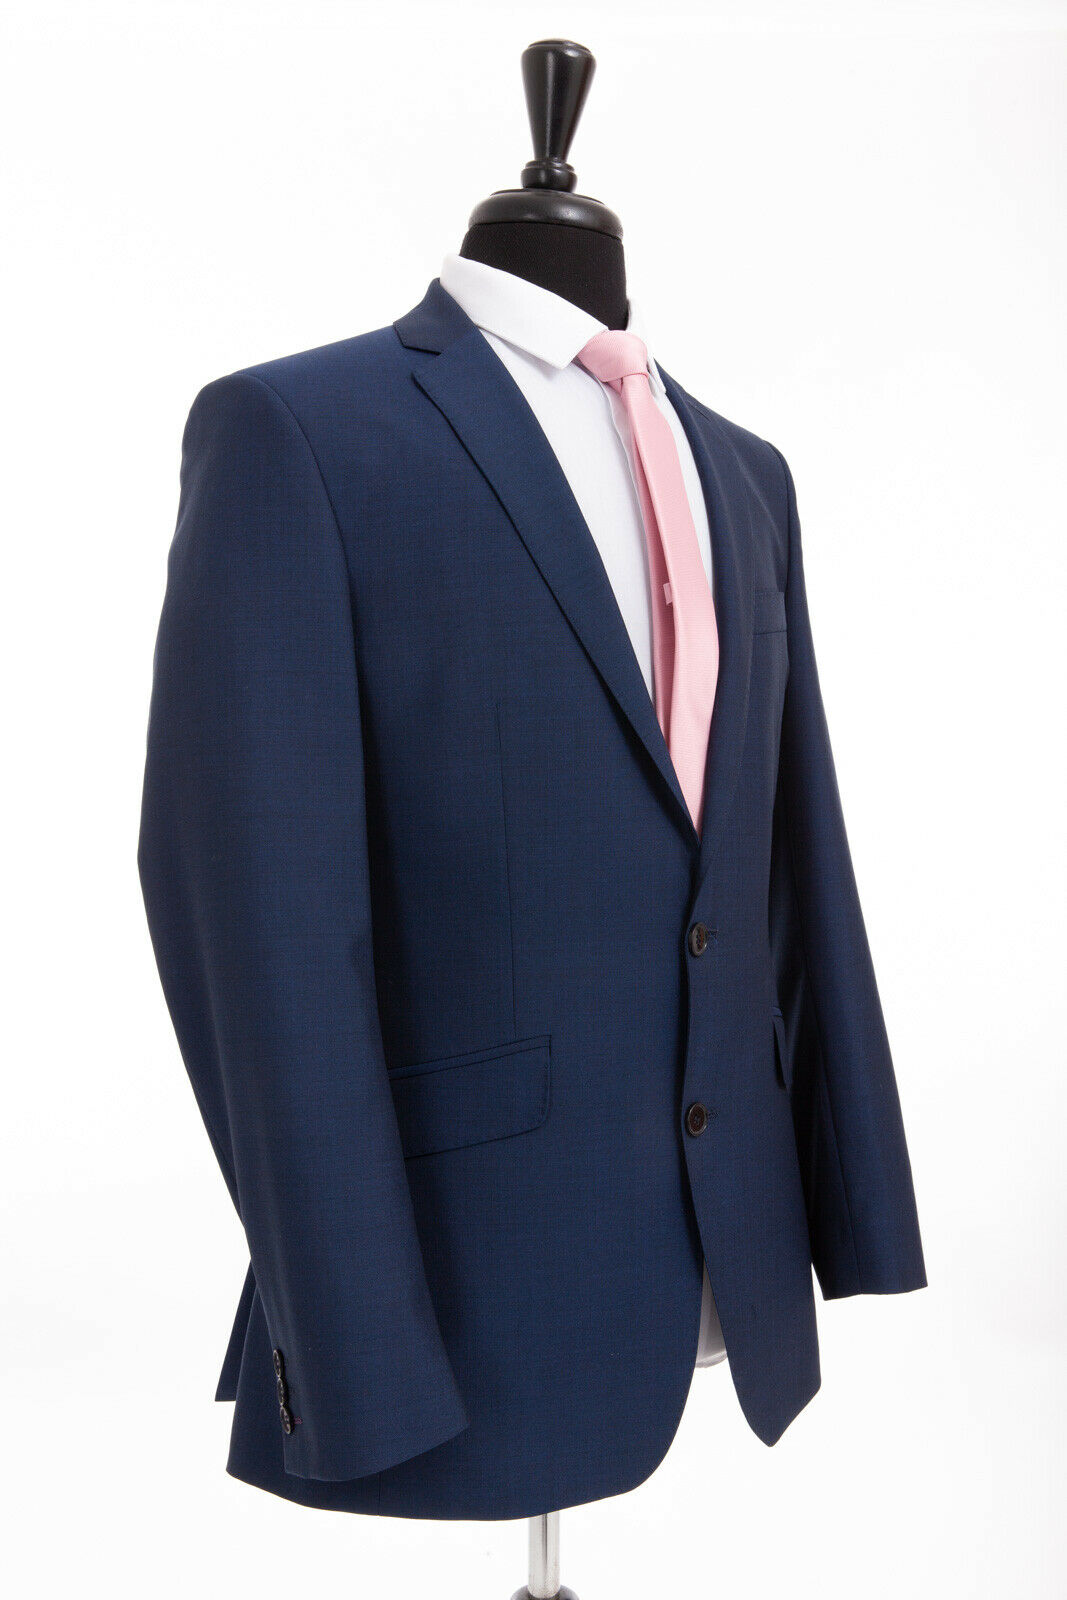 Pierre Cardin Navy 3 Piece Wedding Prom Suit - Brand New